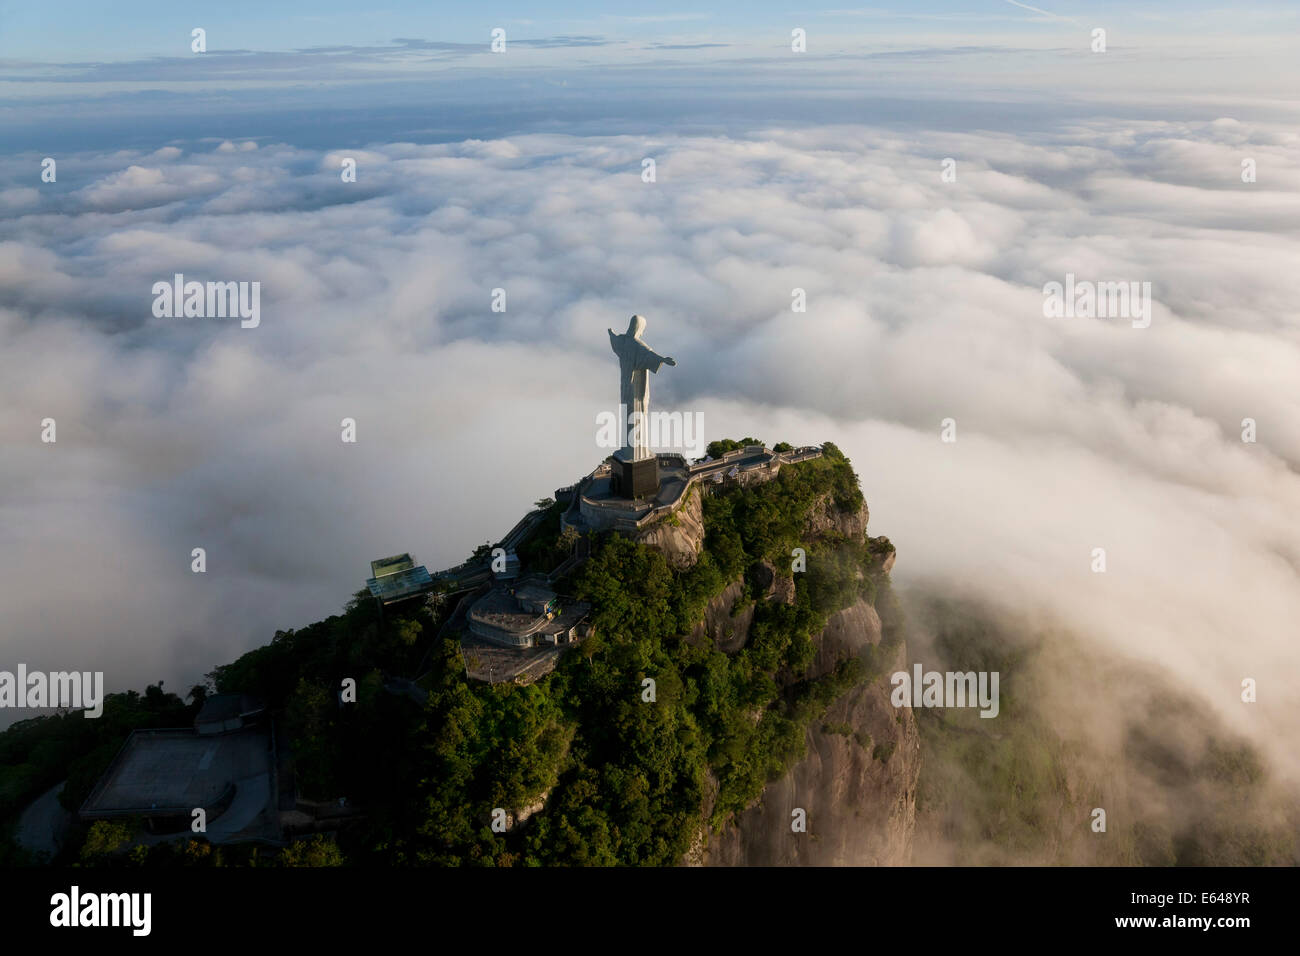 The giant Art Deco statue Jesus known as Cristo Redentor (Christ Redeemer) on Corcovado mountain in Rio de Janeiro Brazil. Stock Photo